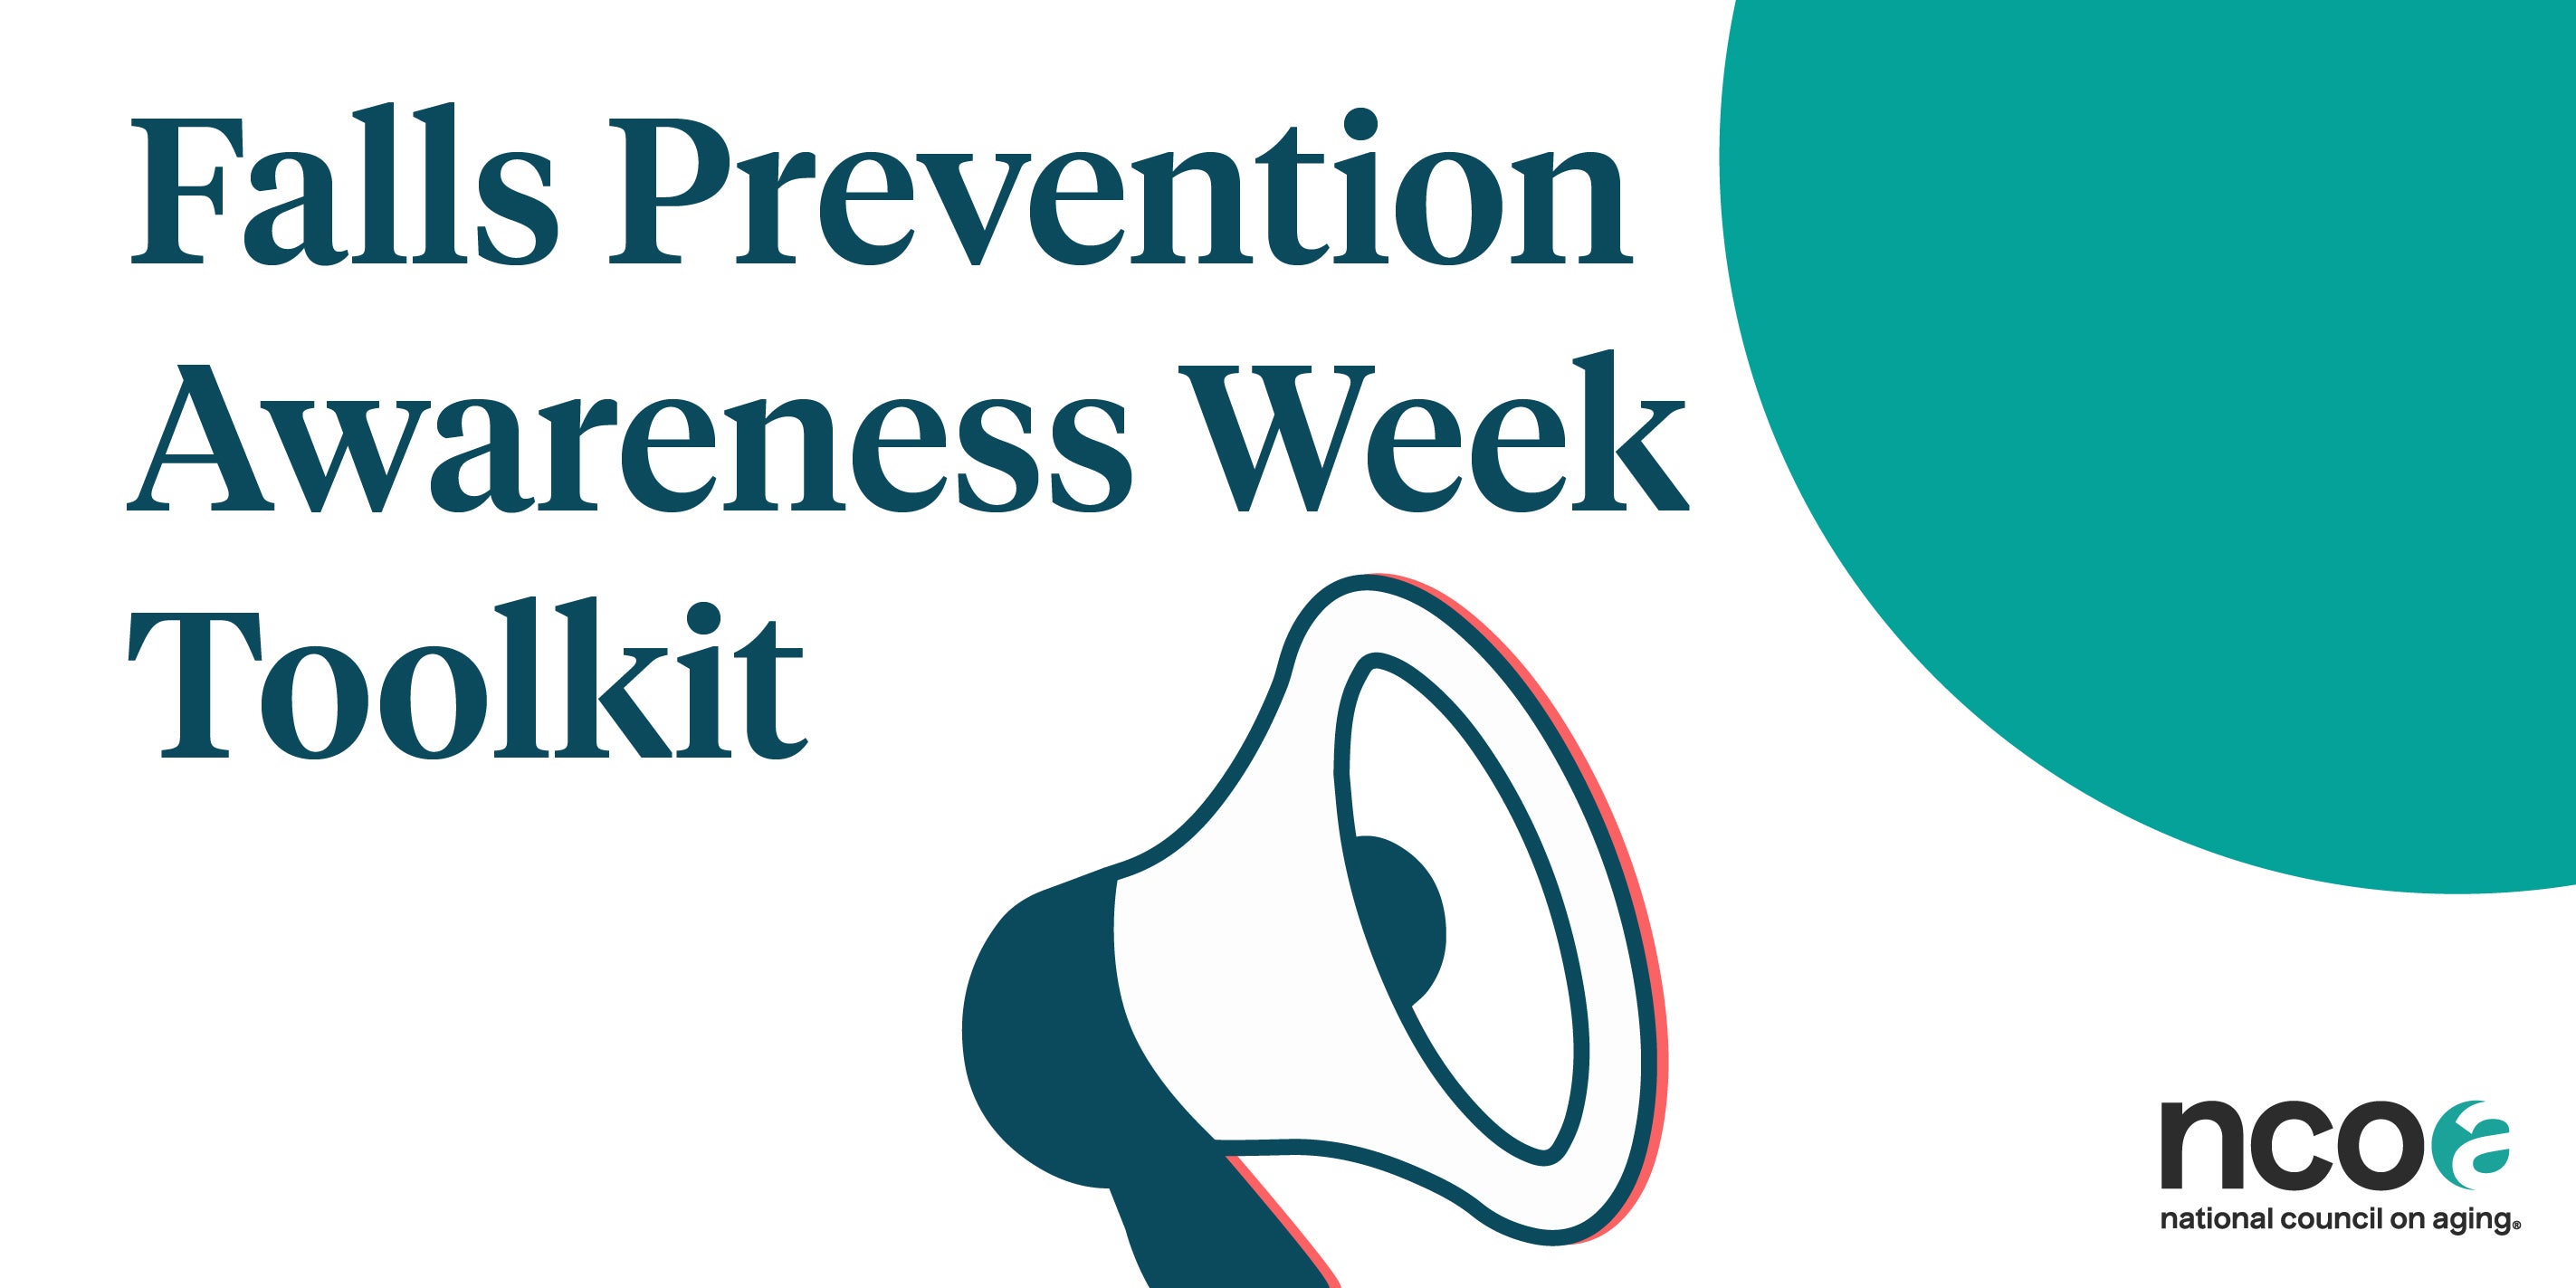 Falls Prevention Awareness Week Toolkit